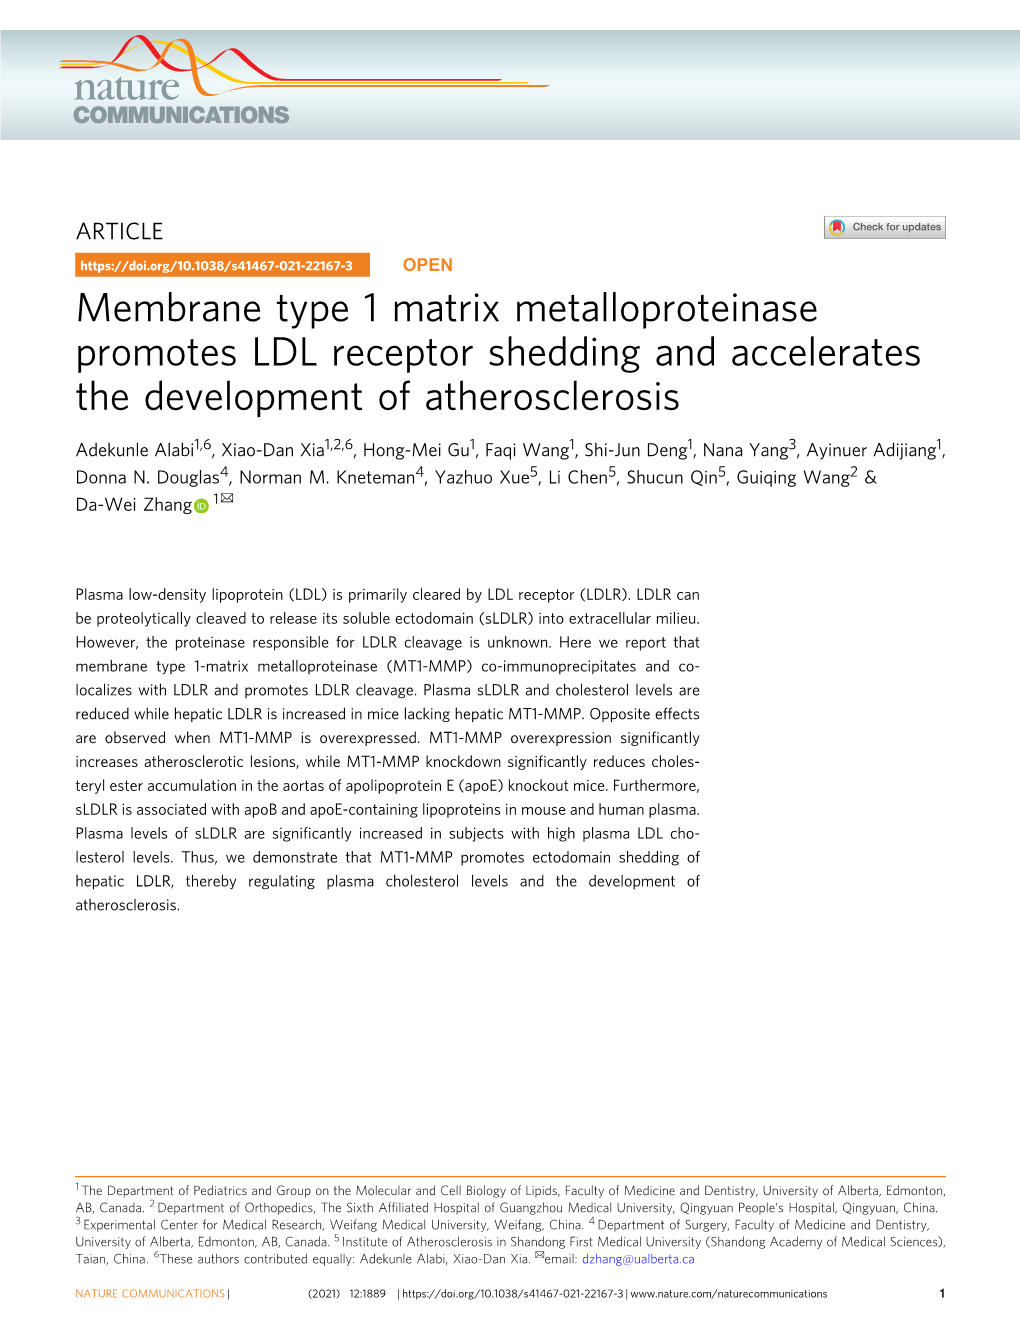 Membrane Type 1 Matrix Metalloproteinase Promotes LDL Receptor Shedding and Accelerates the Development of Atherosclerosis